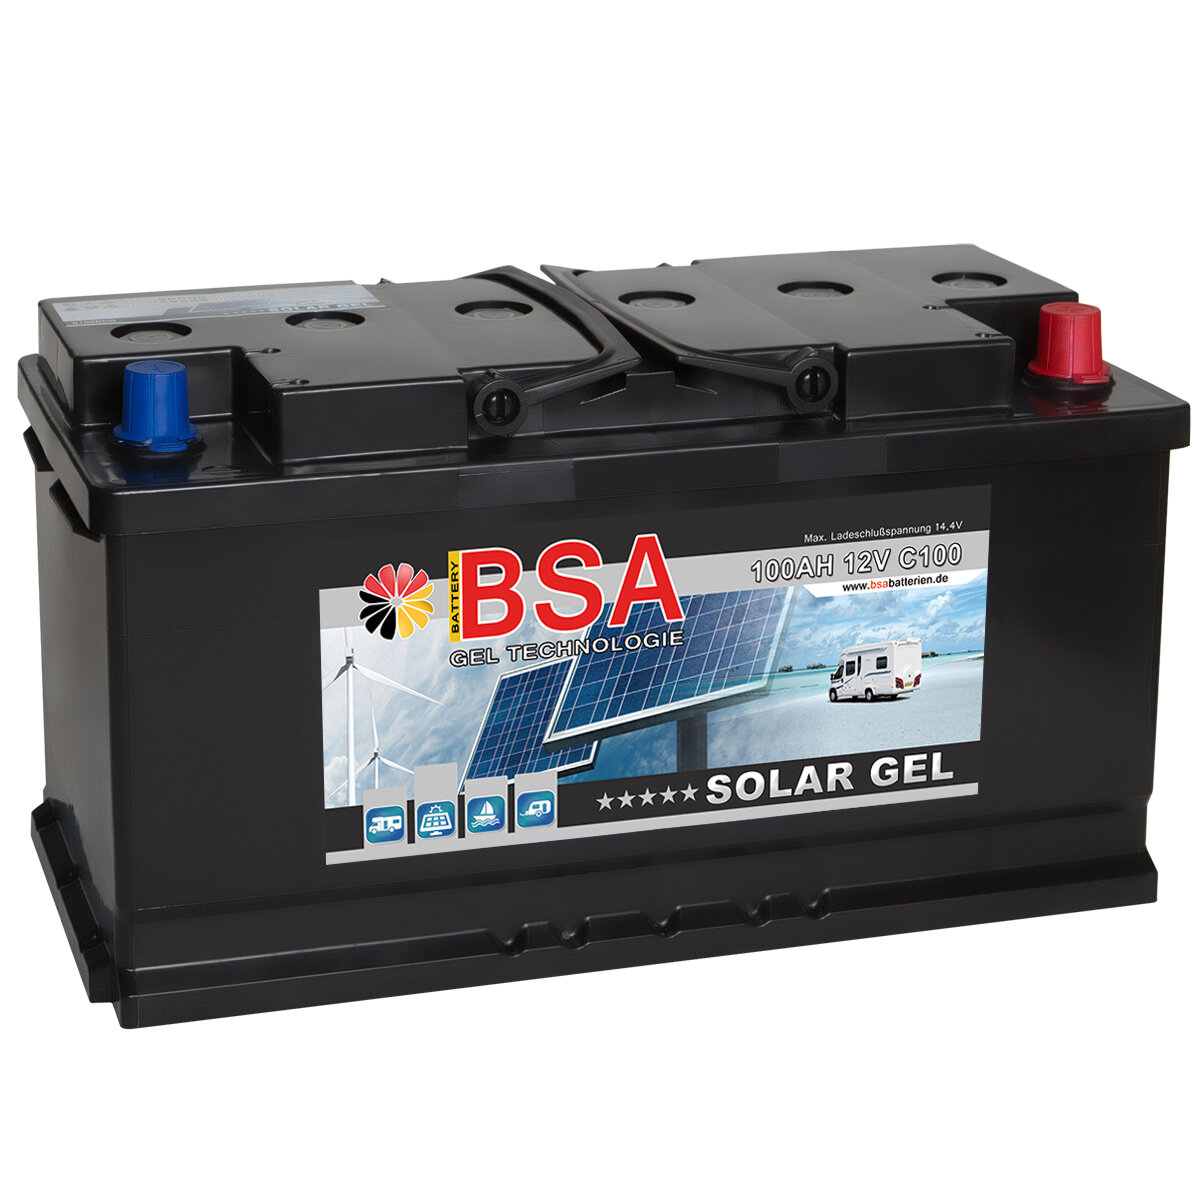 https://www.autobatterien24.com/media/image/product/1529/lg/bsa-solarbatterie-gel-100ah-12v.jpg